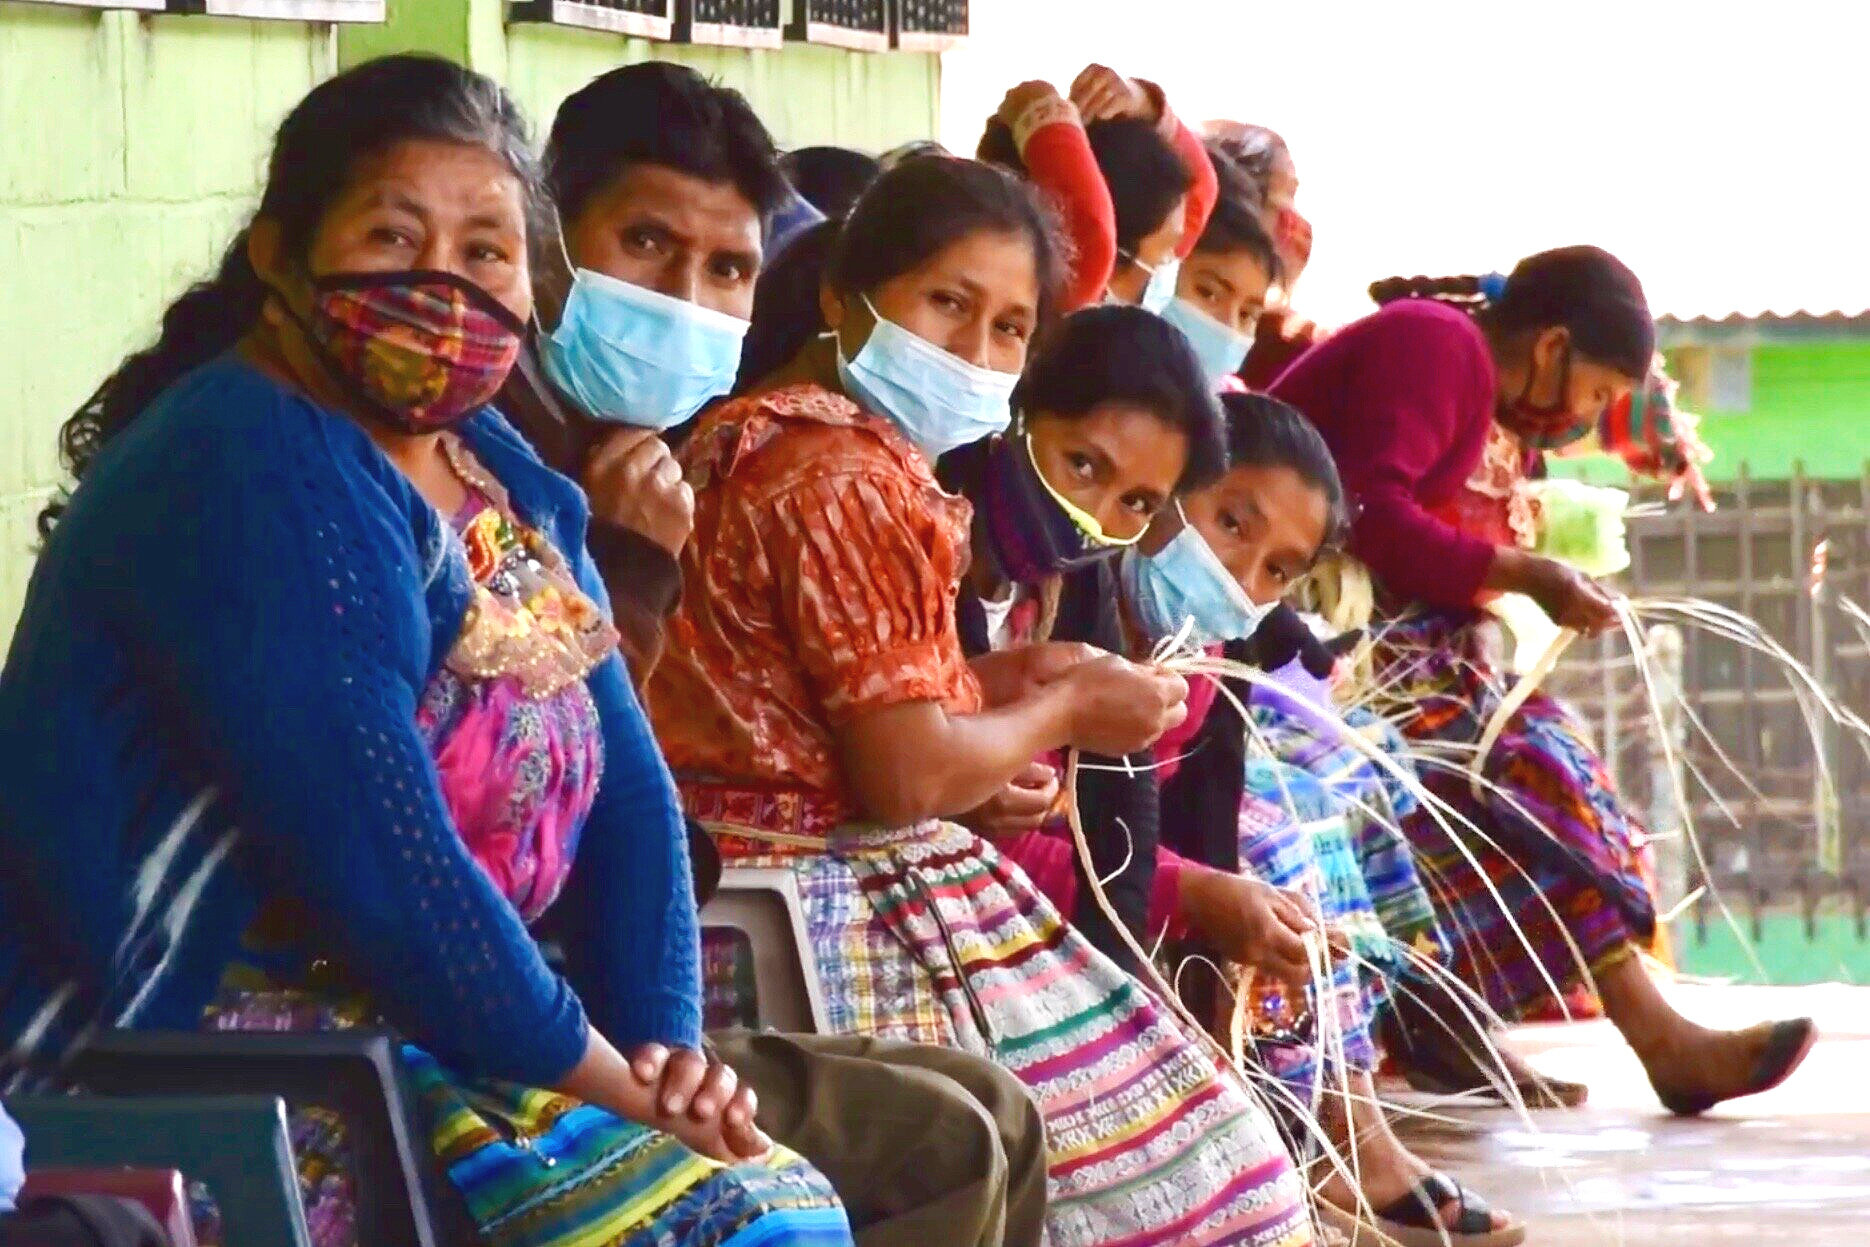 Video: GHF Coronavirus Mobile Clinic Reboot Initiative ◆ Guatemala